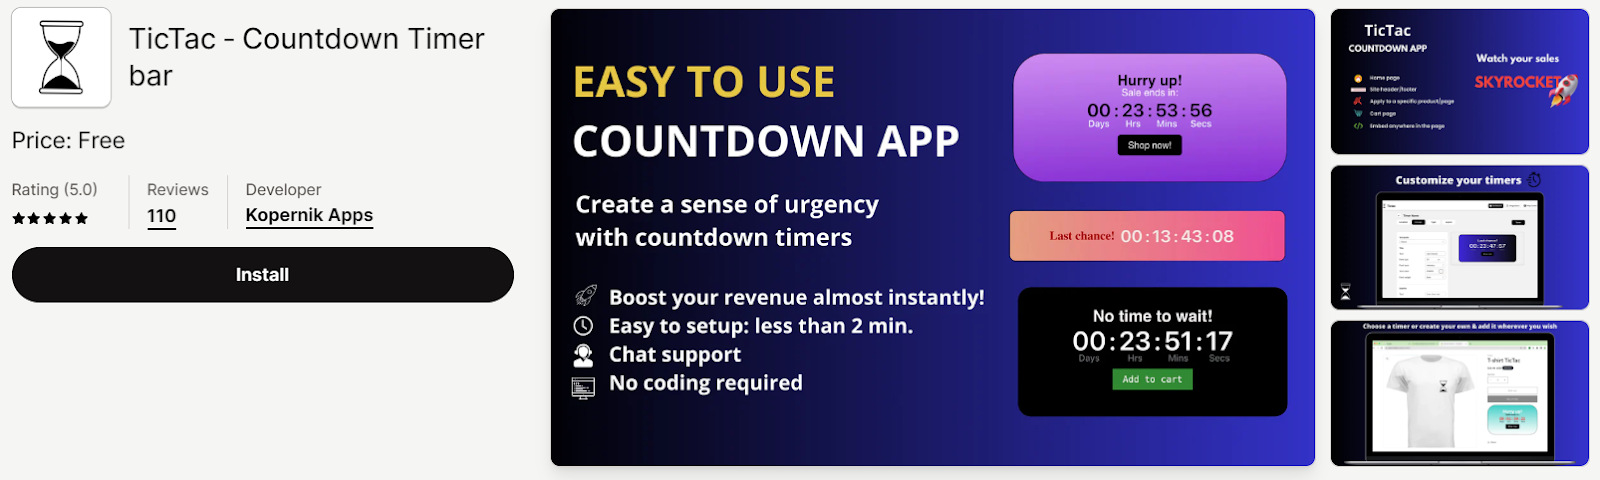 TicTac countdown timer app